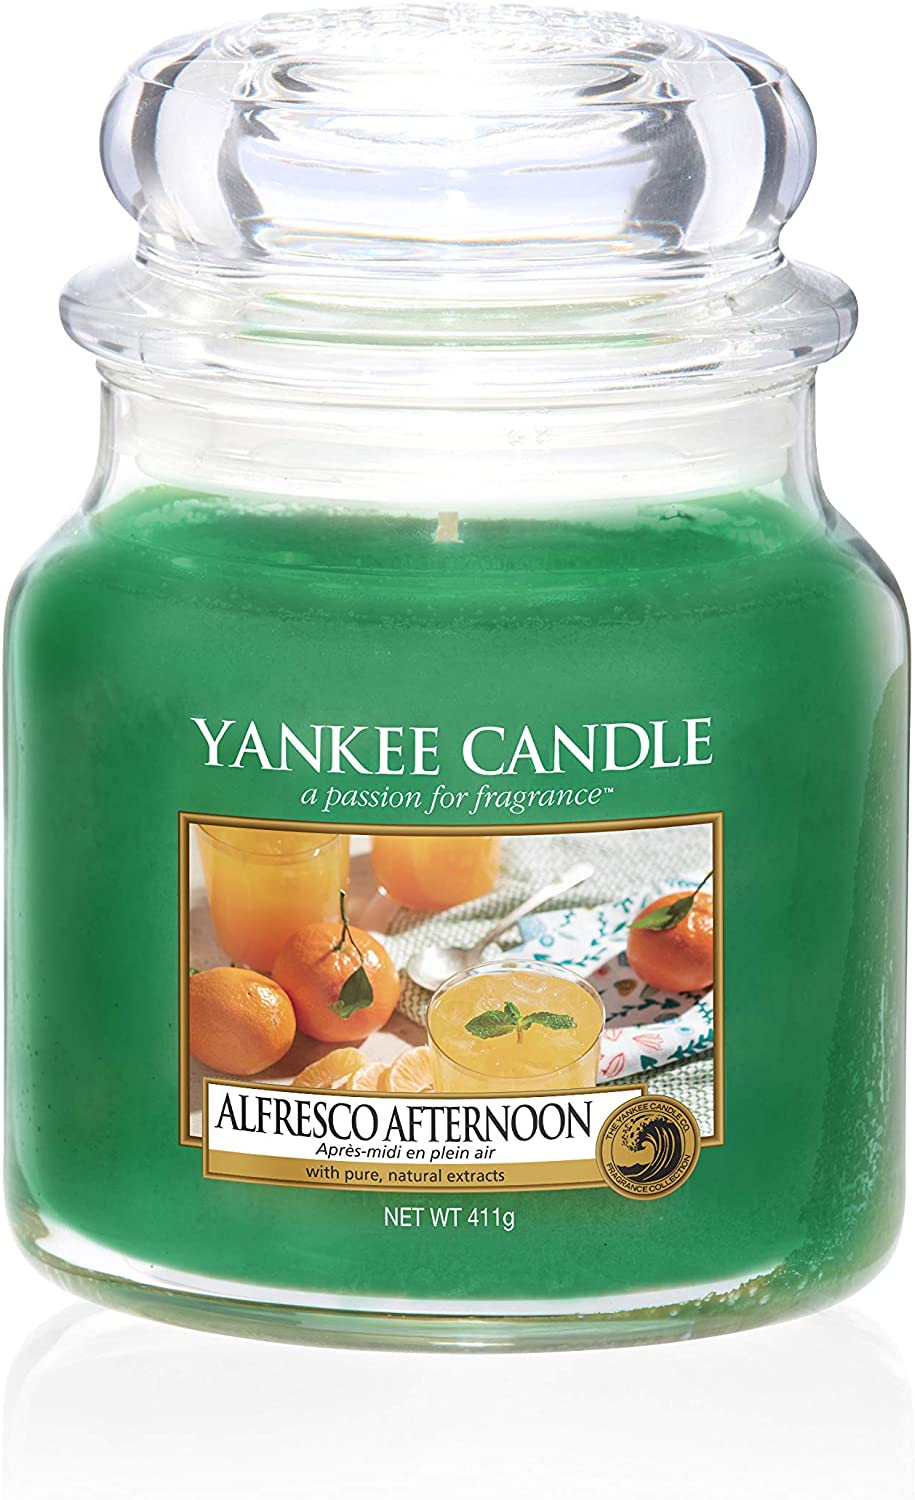 Yankee Candle Alfresco Afternoon Green Medium Jar Candle